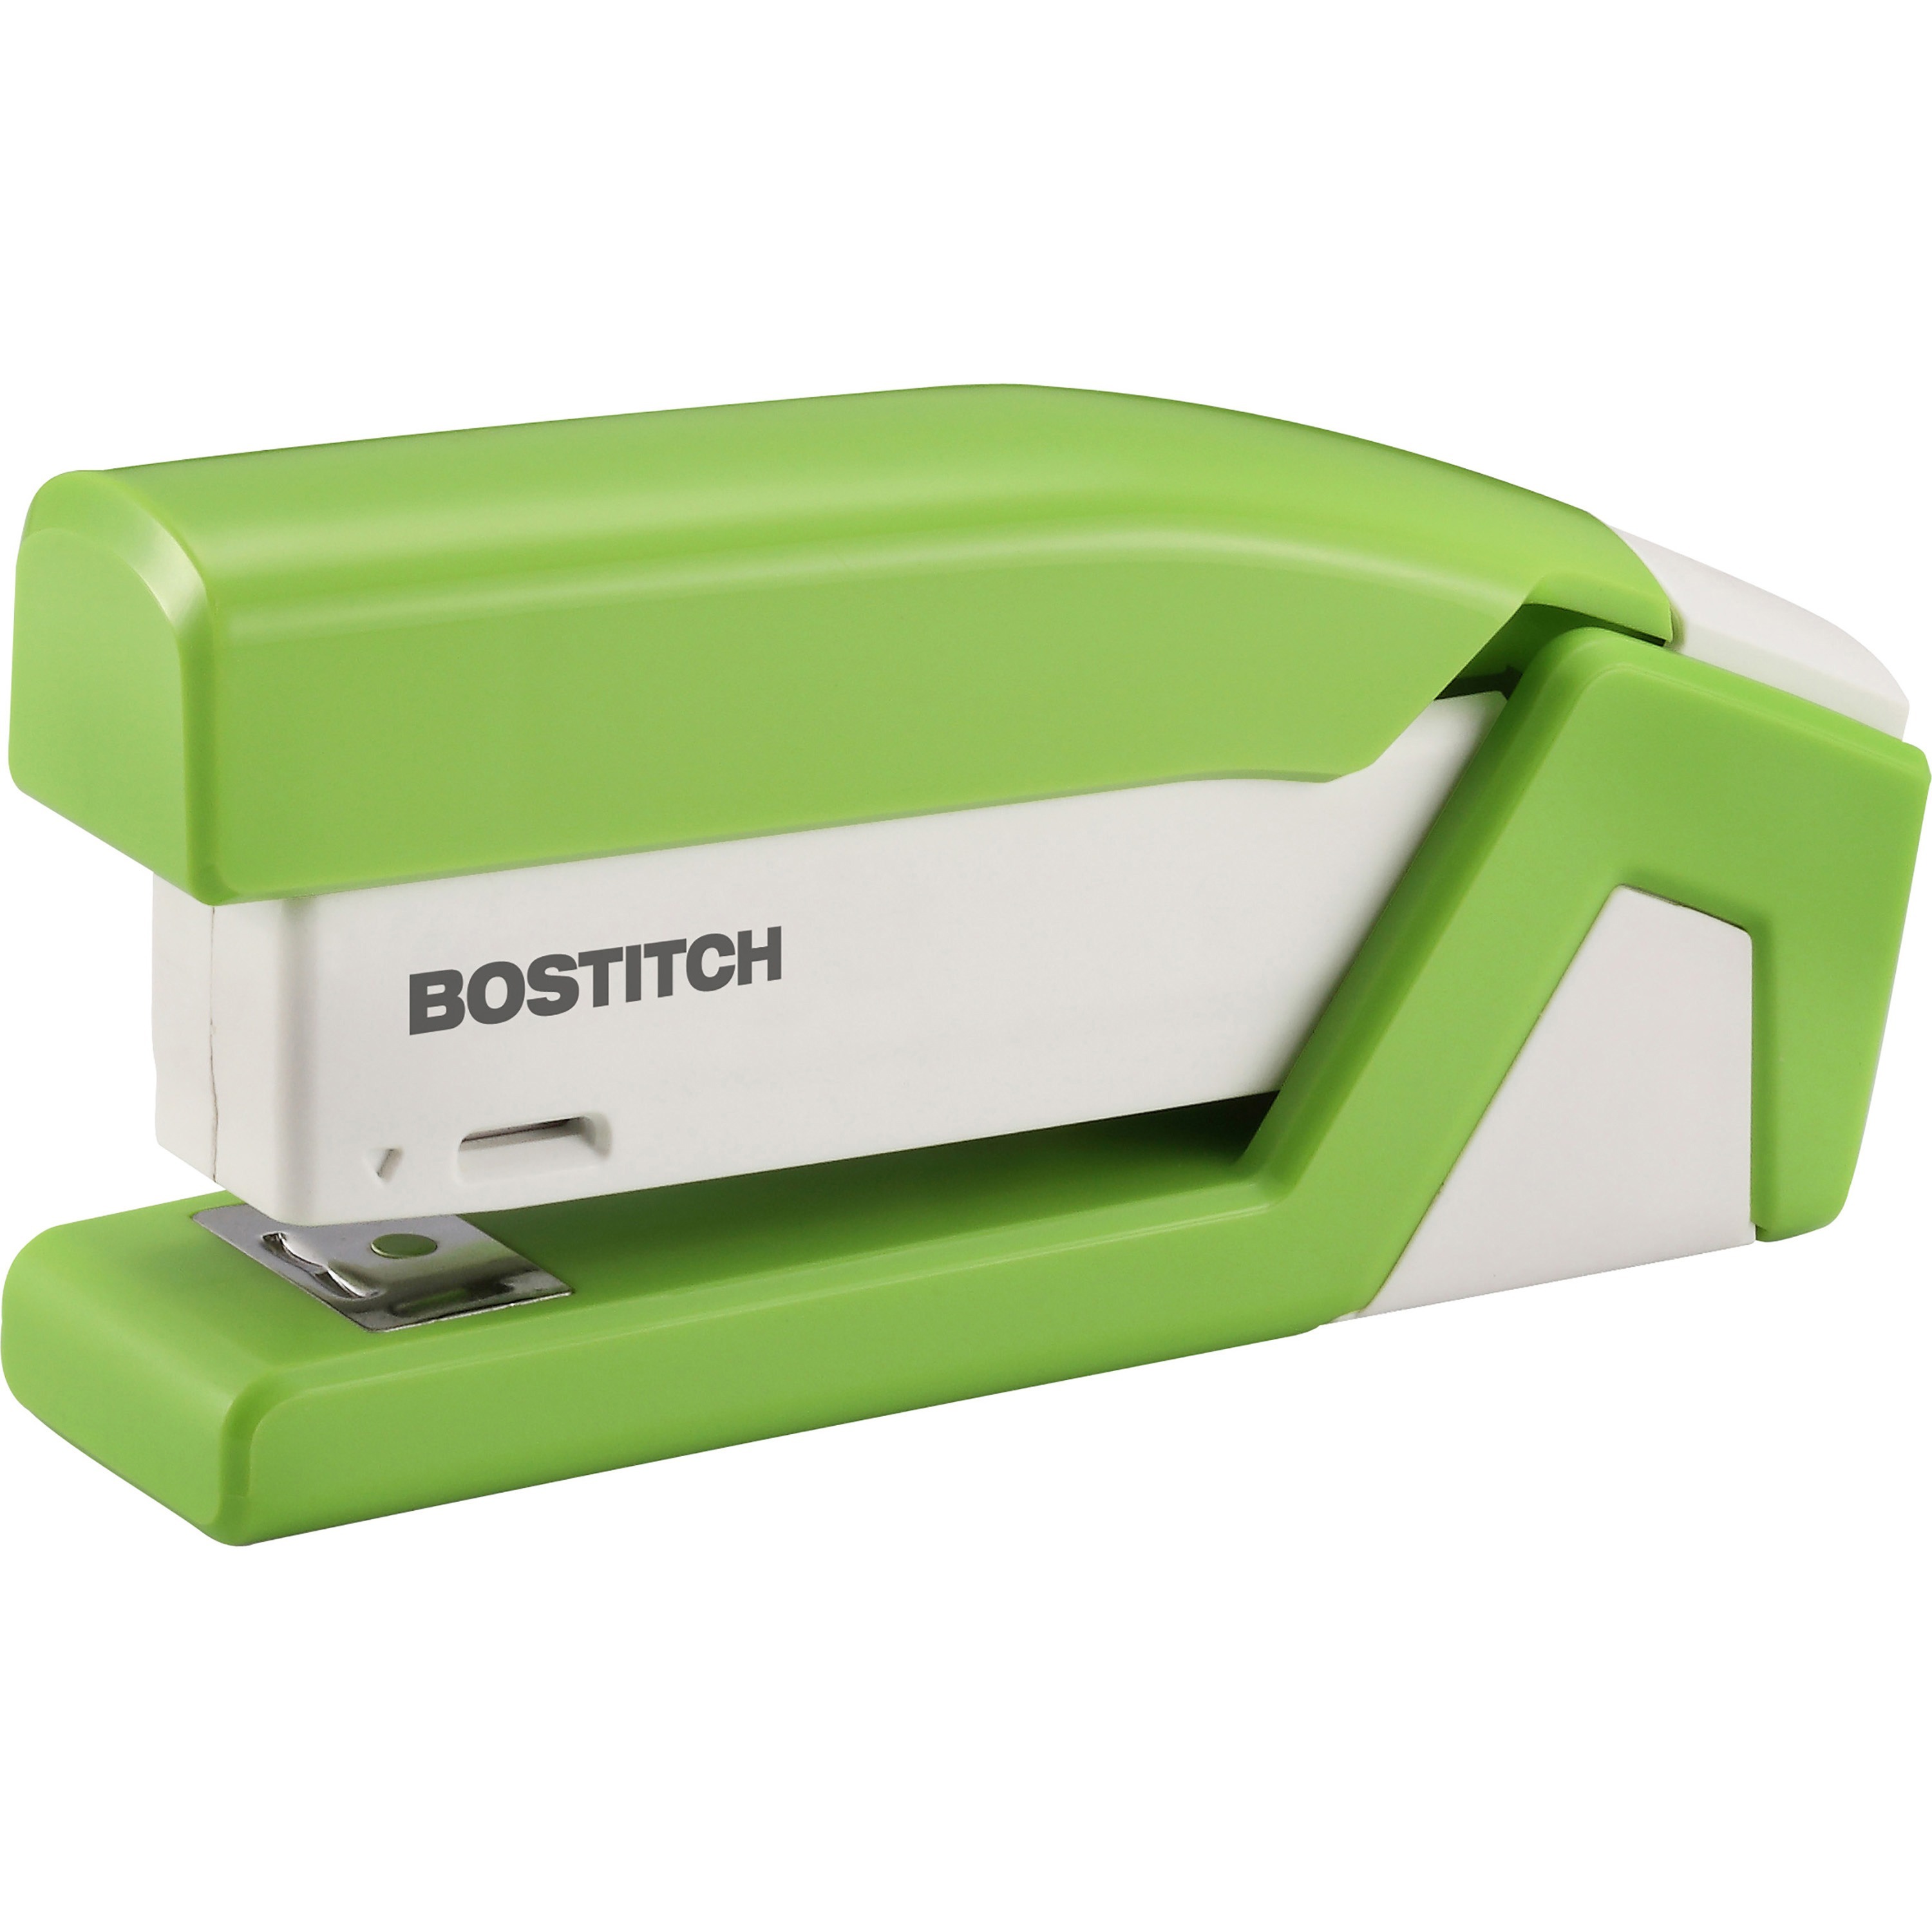 Desktop Stapler 20-Sheet Capacity Green PaperPro inPOWER Green/Black